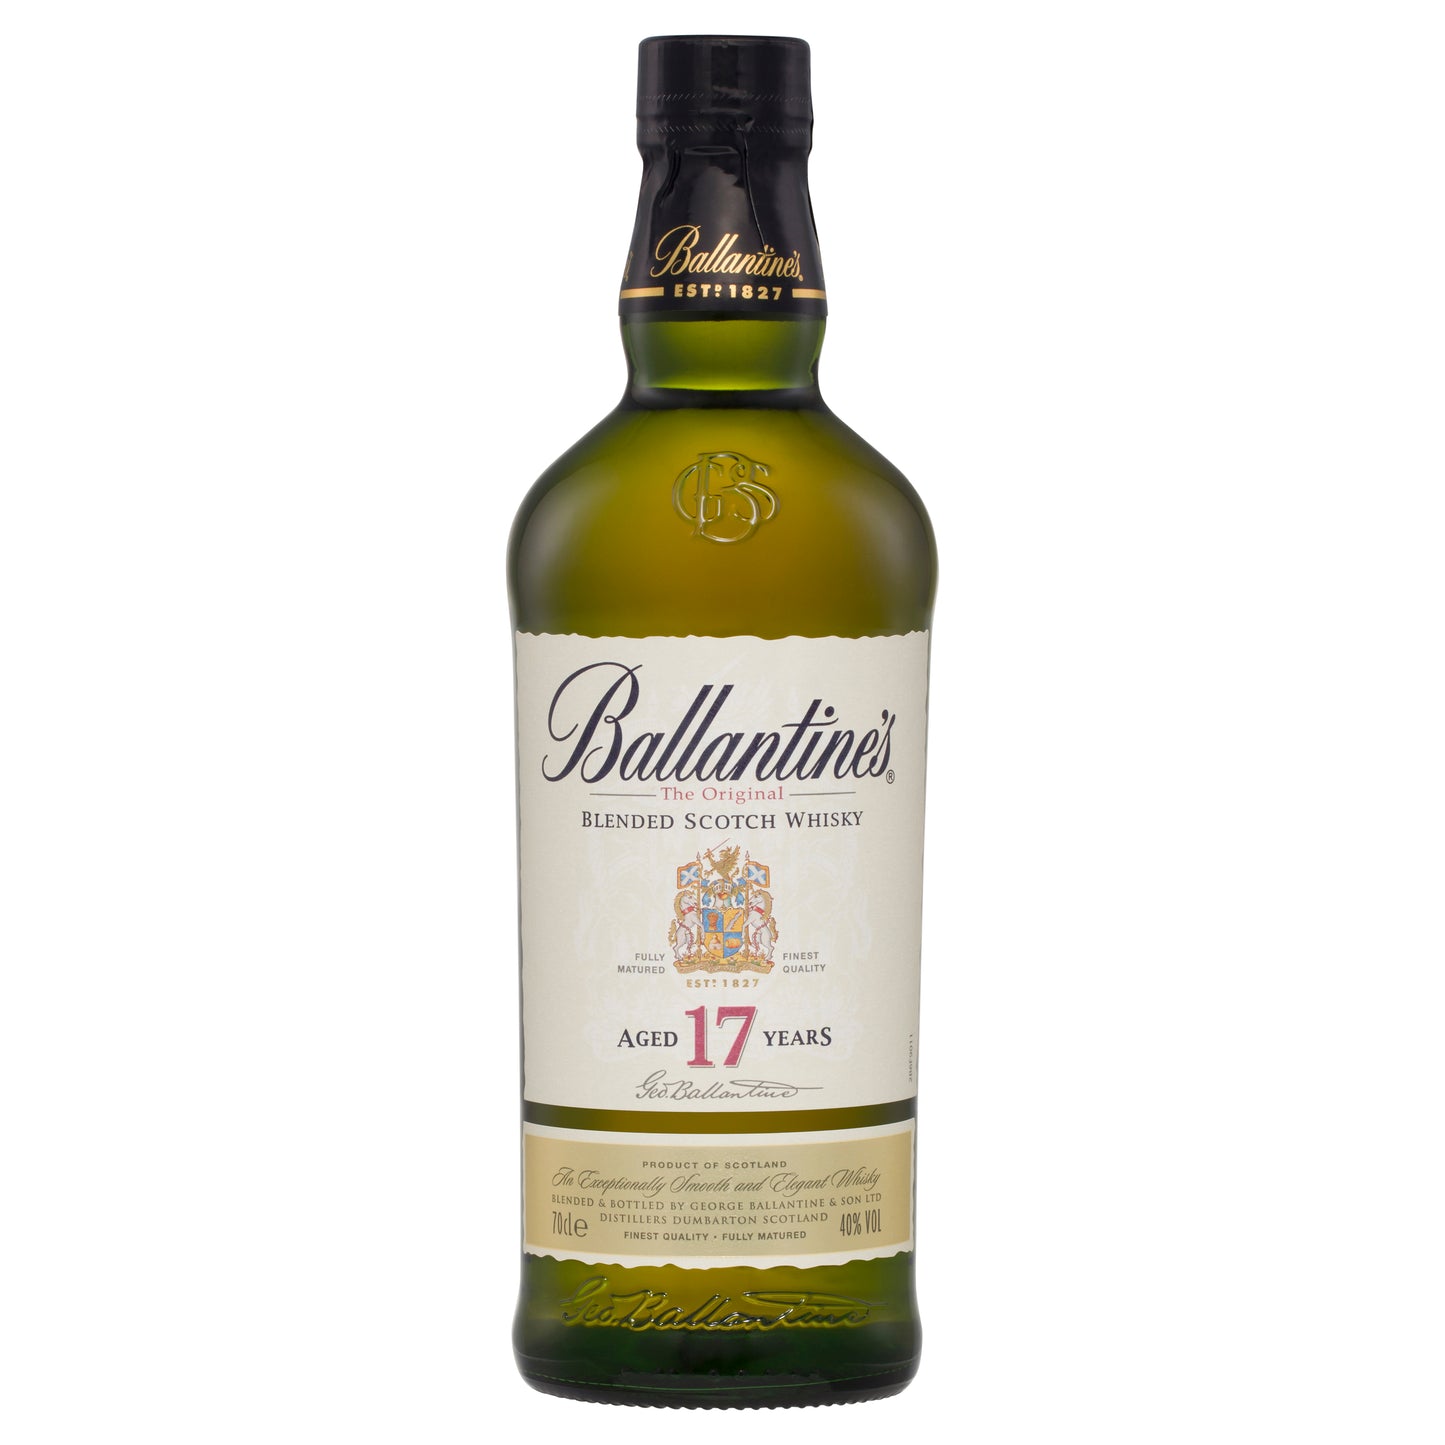 Ballantines Aged 17 Years Scotch Whisky 700ml